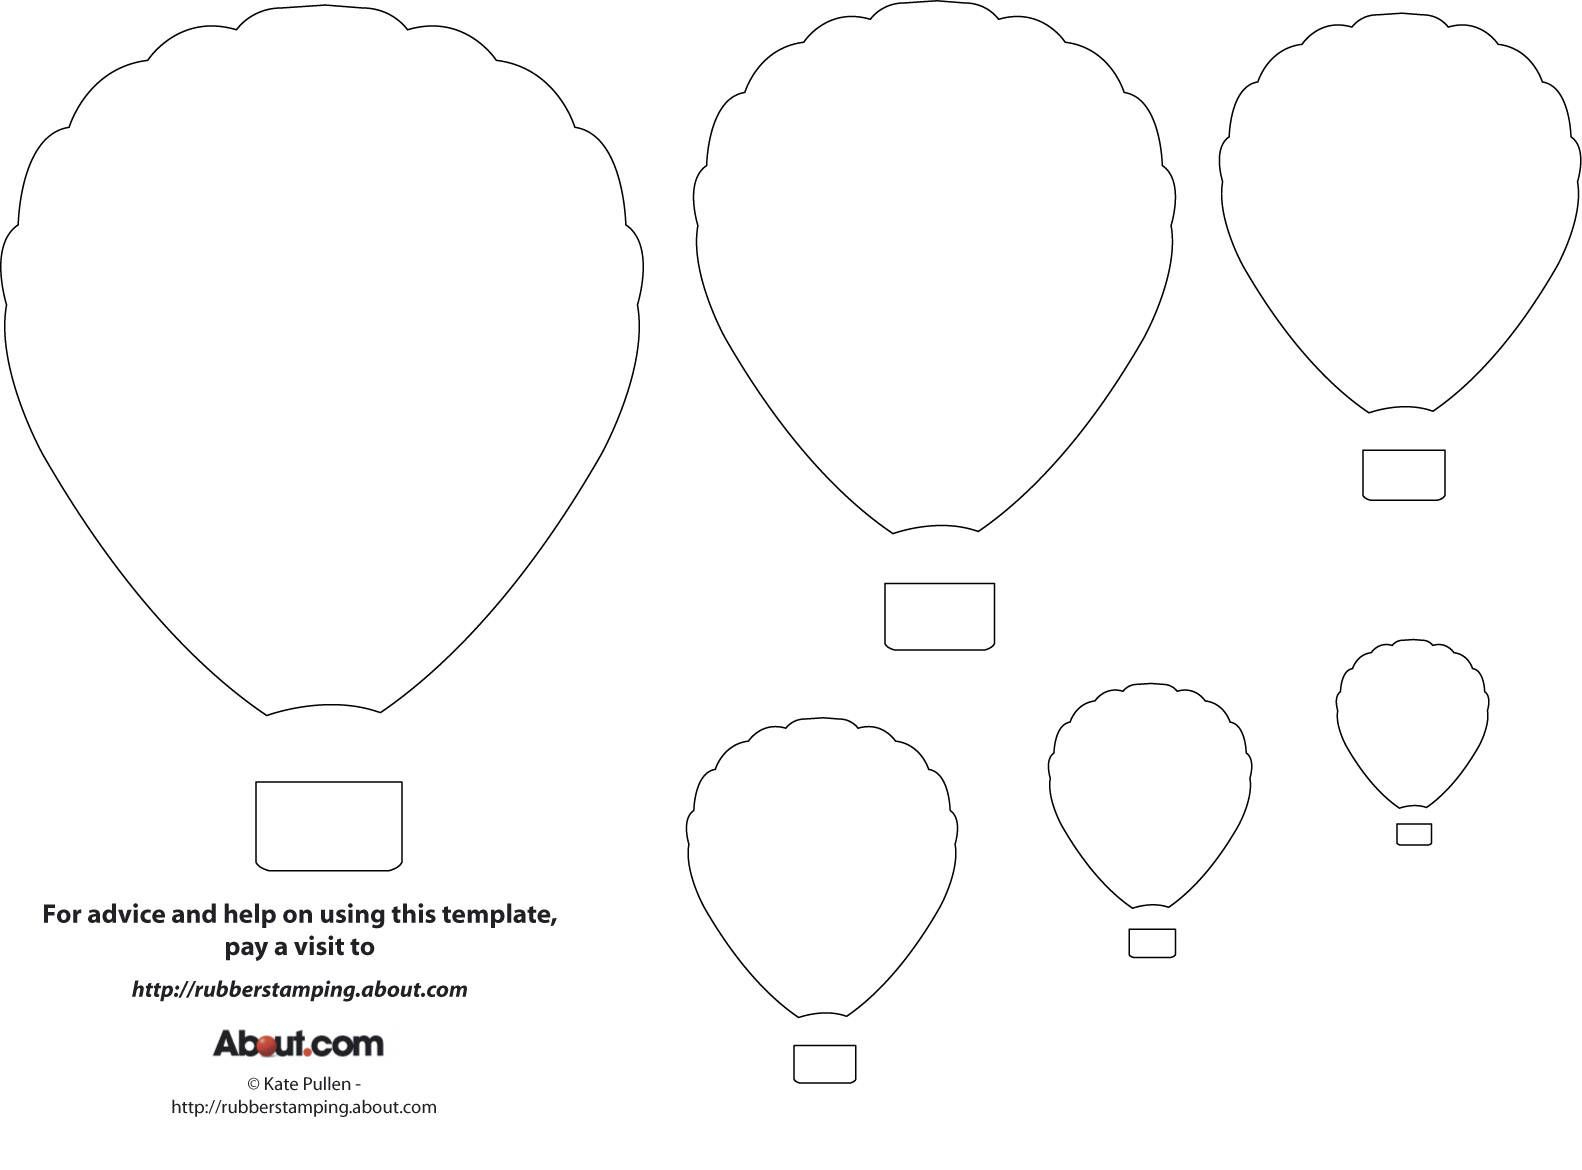 12 Free Printable Templates | Printables | Pinterest | Balloon - Free Printable Pictures Of Balloons